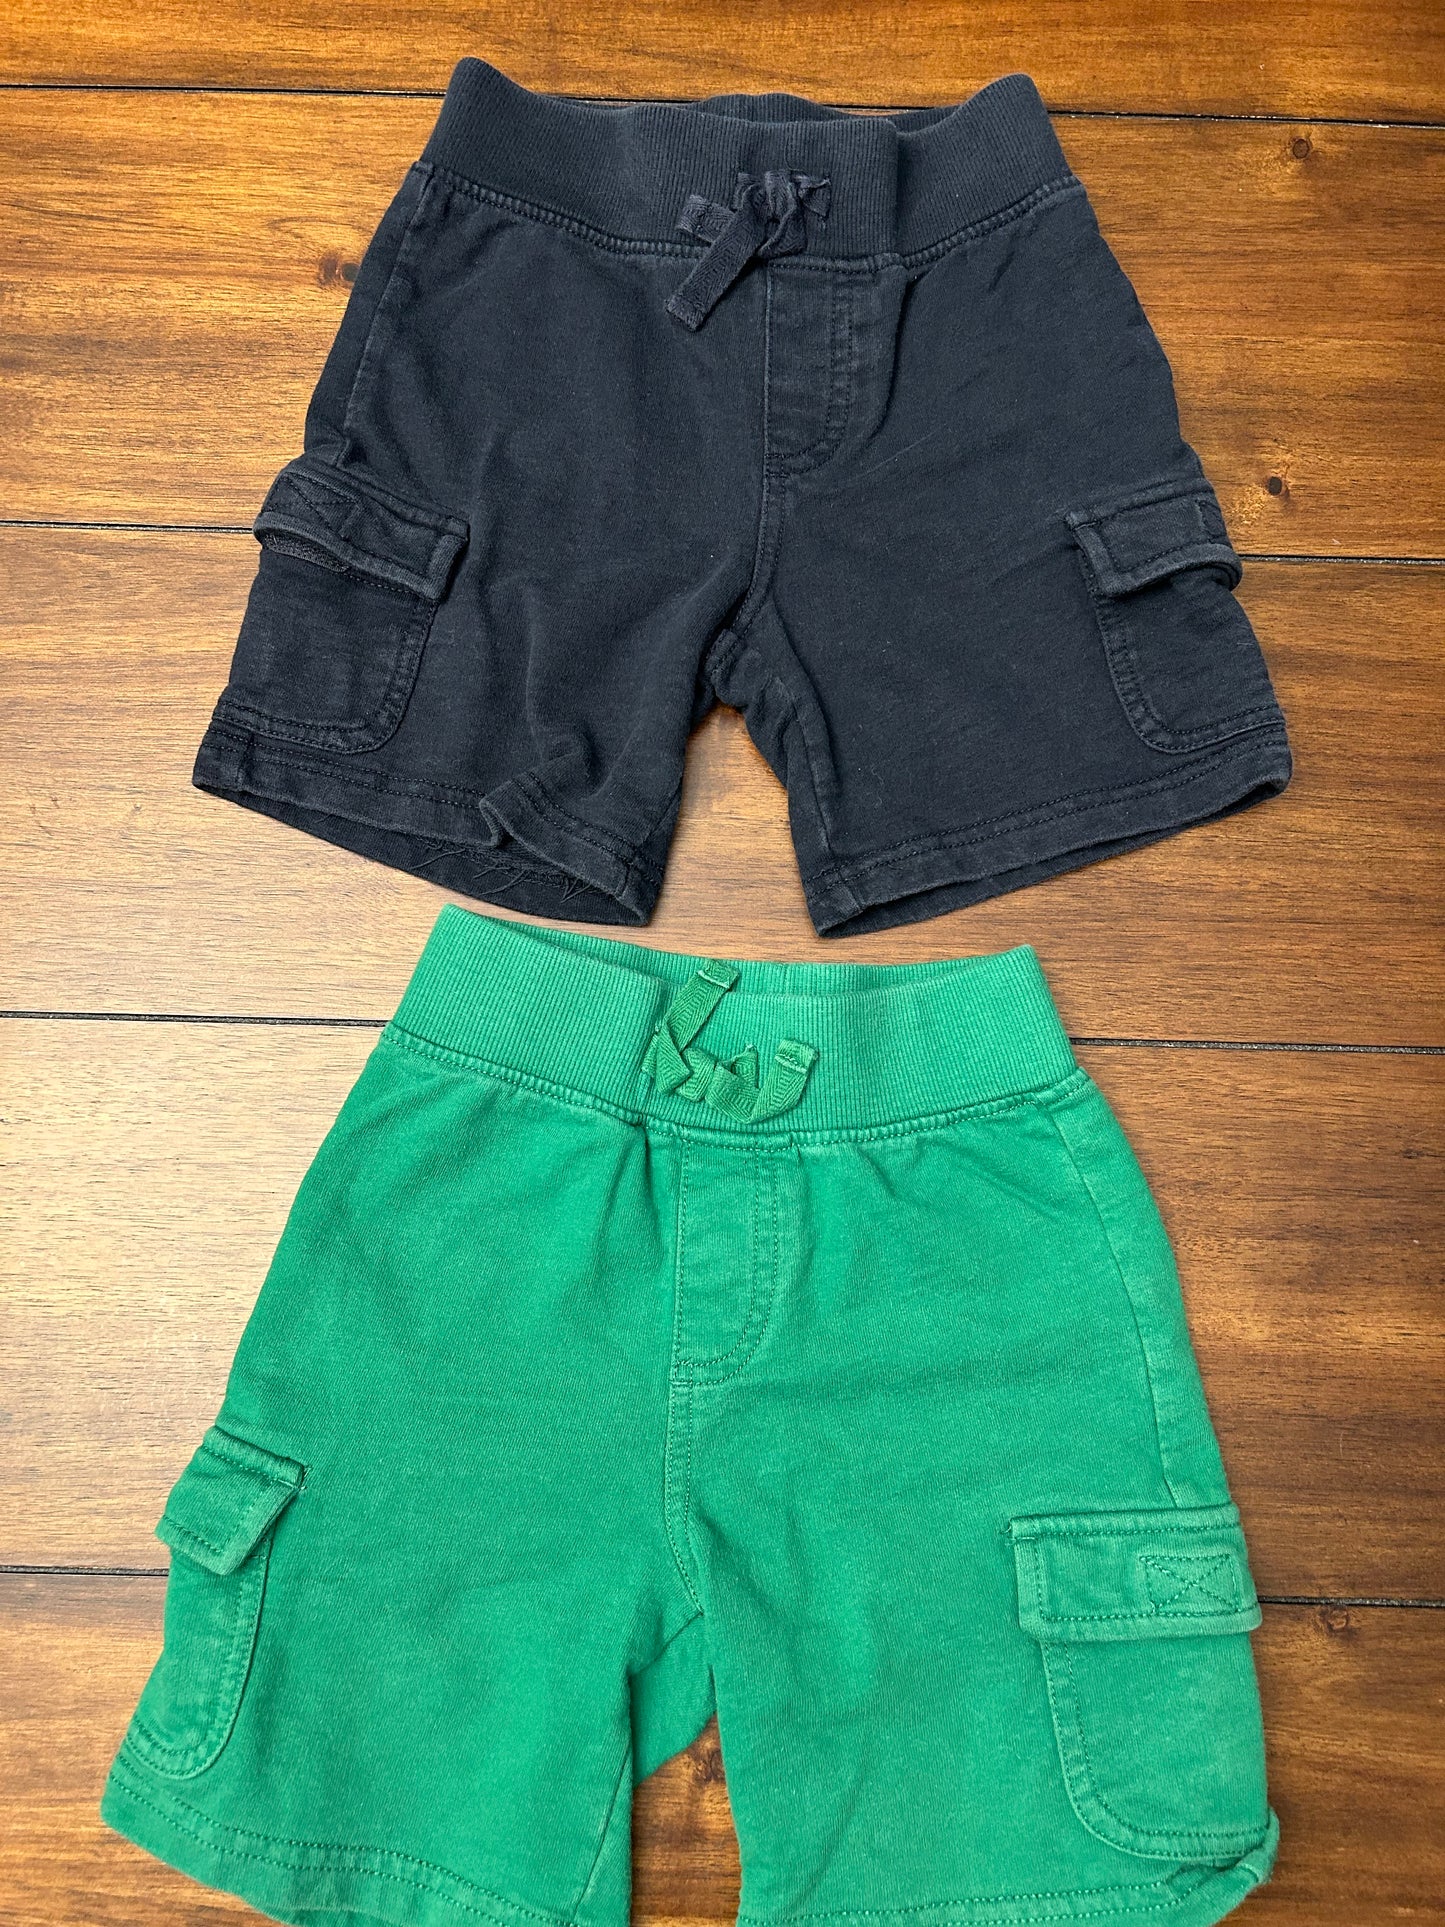 Gymboree Boys Navy & Green Cotton Shorts Bundle Size 2T PPU 45040